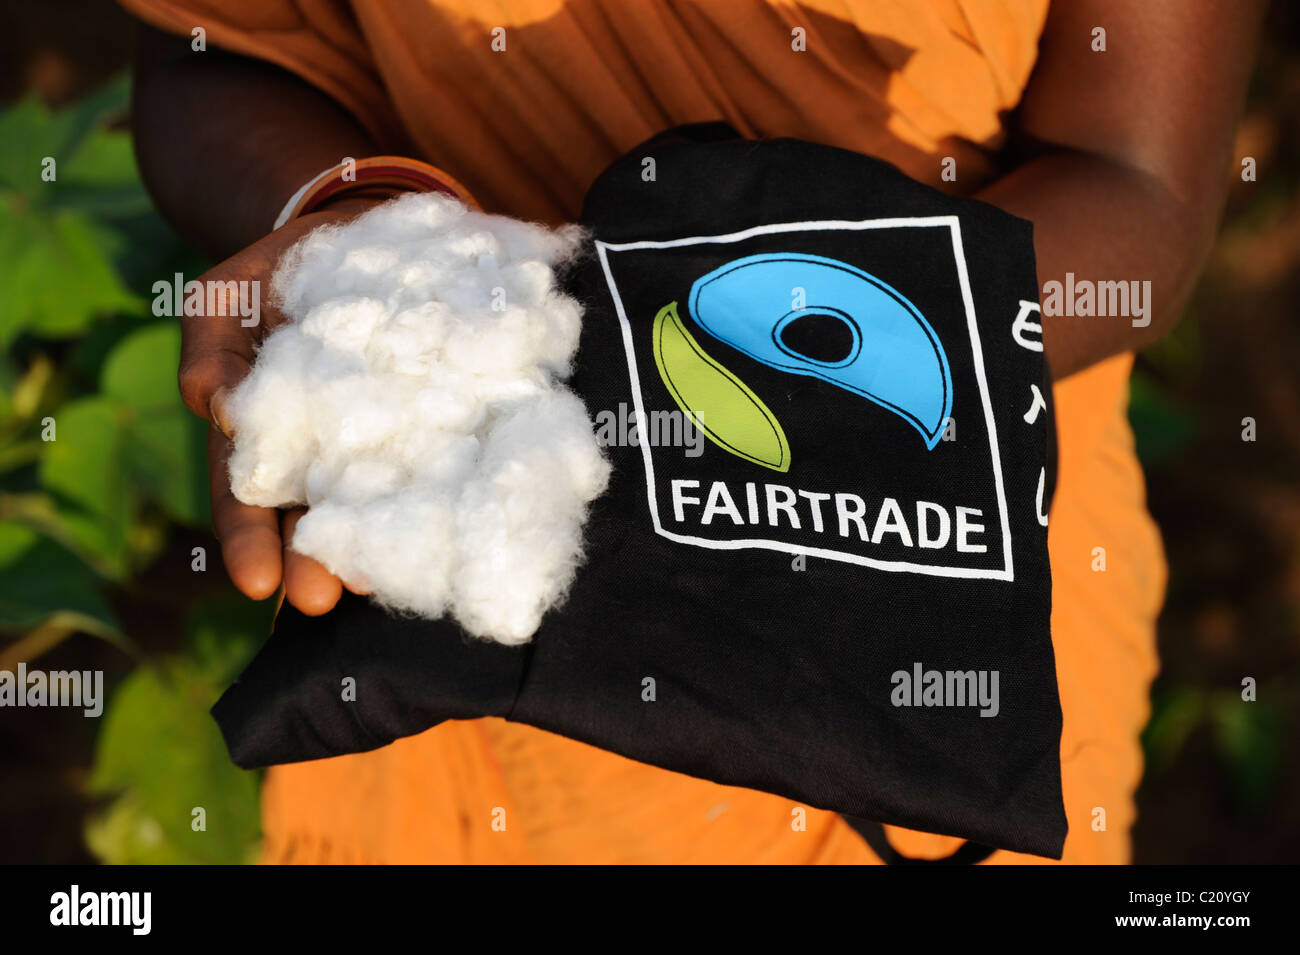 India Orissa , fair trade and organic cotton farming, farmers of Agrocel cooperative near Rayagada, cotton bag with fair trade label & picked cotton Stock Photo